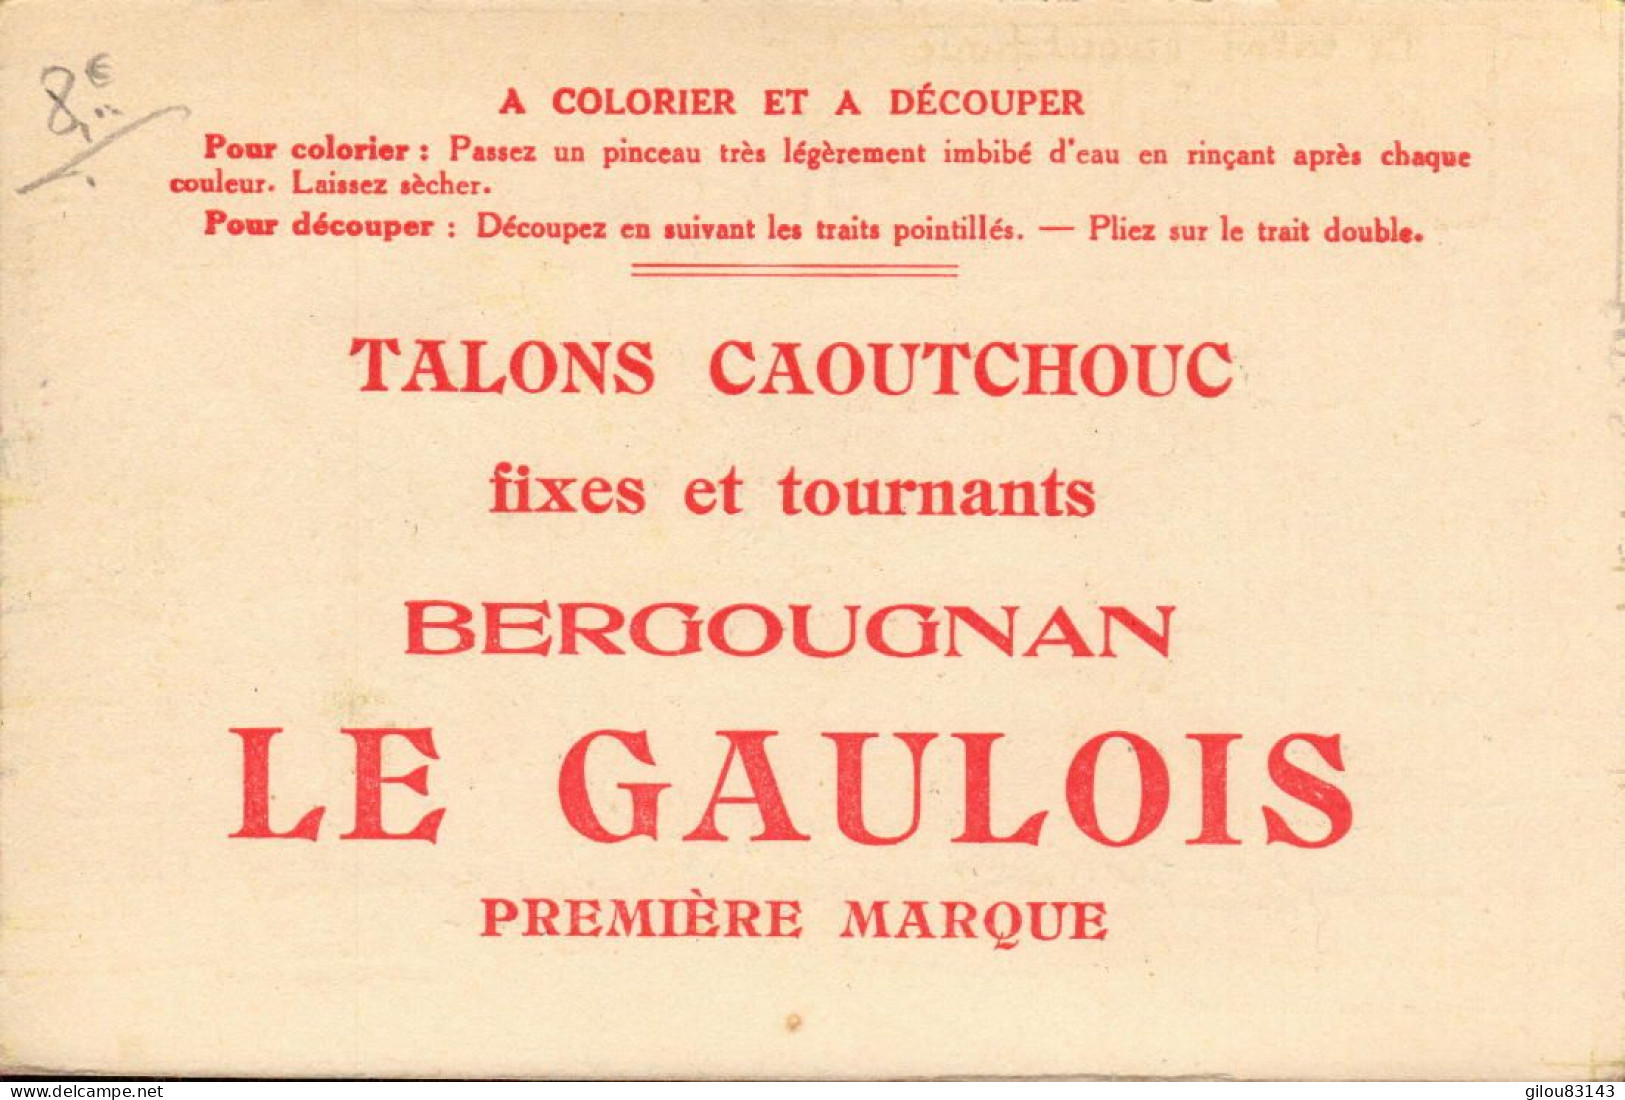 Bergougnan, Le Gaulois, Talons Caoutchouc, Illustration Rugby - Advertising